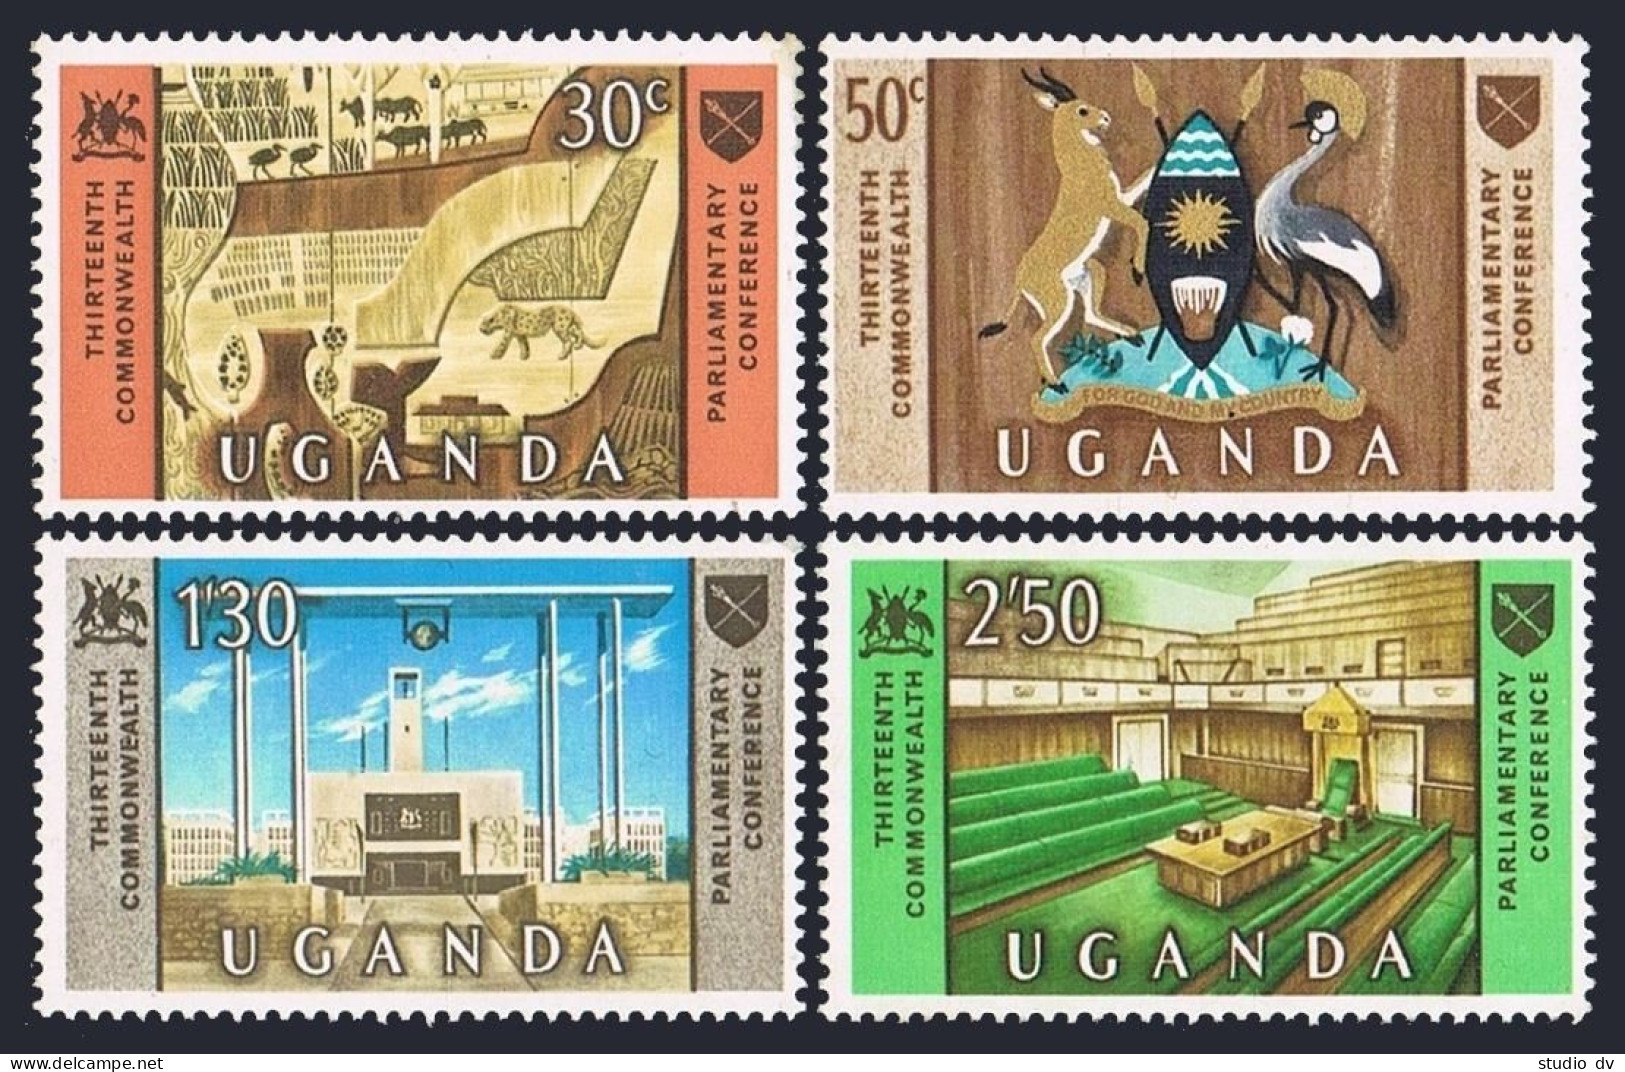 Uganda 111-114, MNH. Mi 101-104. Commonwealth Parliamentary Association, 1967. - Uganda (1962-...)